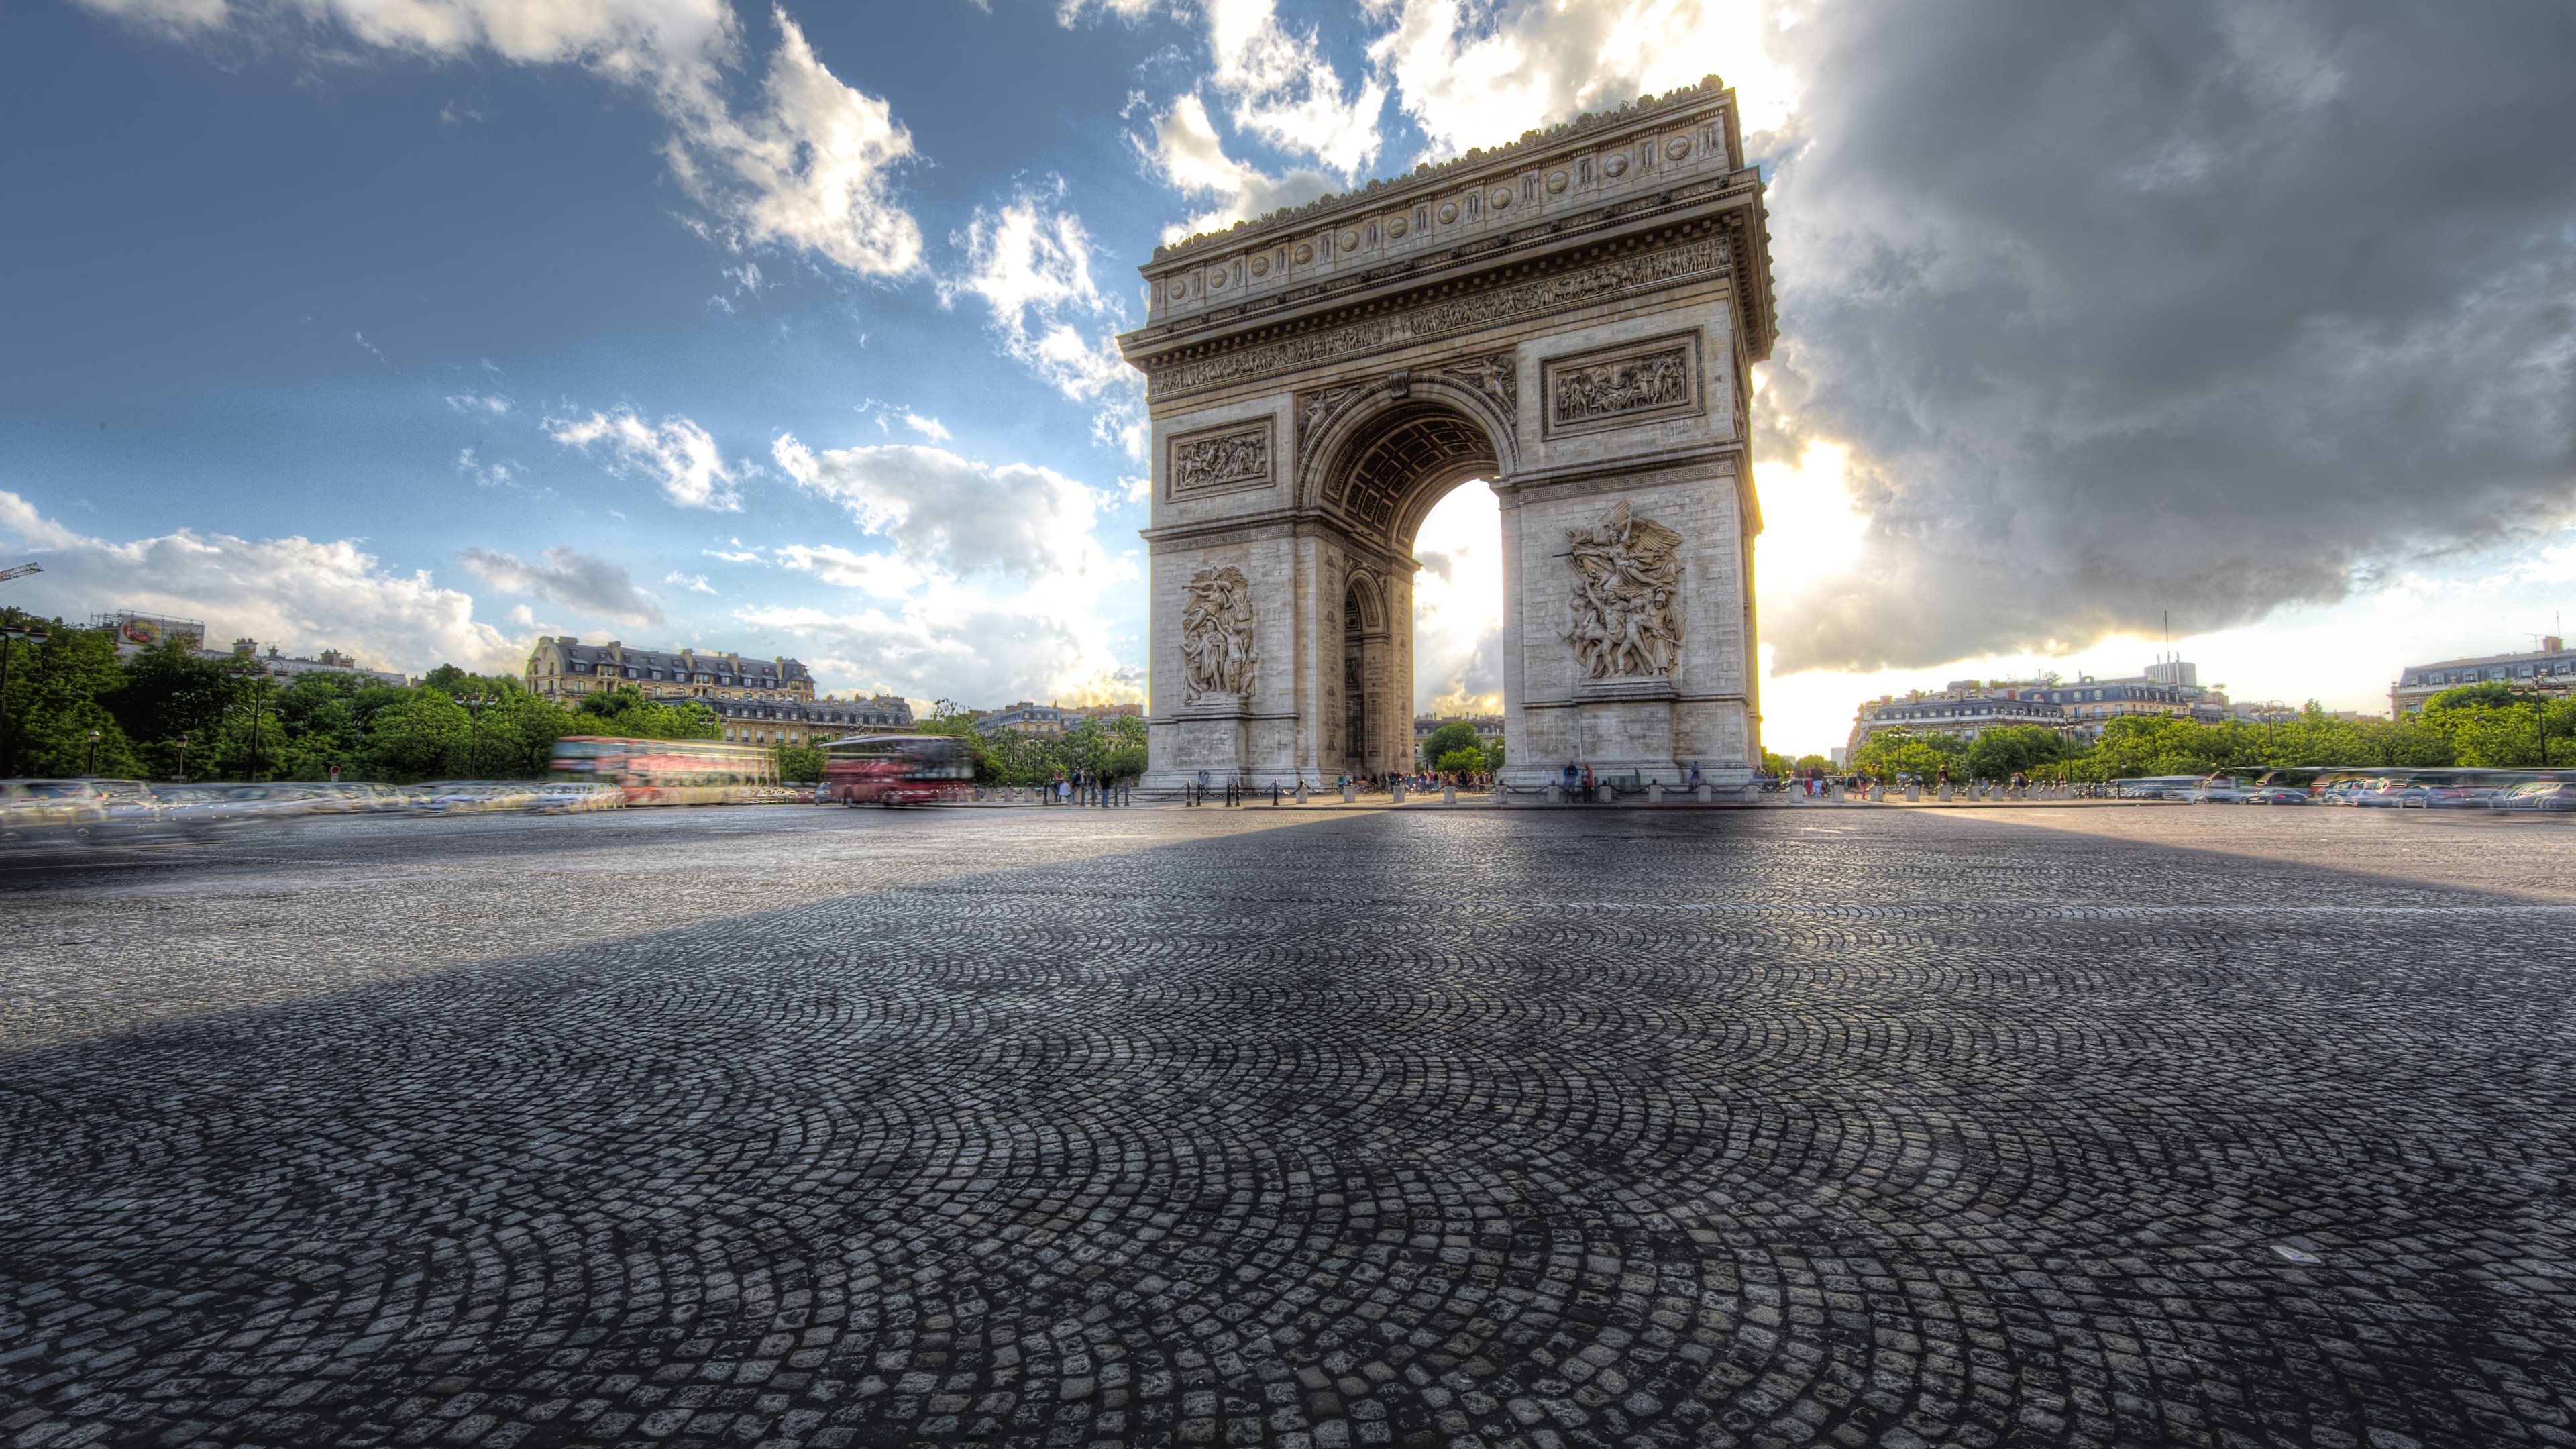 Arc de Triomphe, 4K wallpaper, Ultra HD image, Stunning background, 3840x2160 4K Desktop